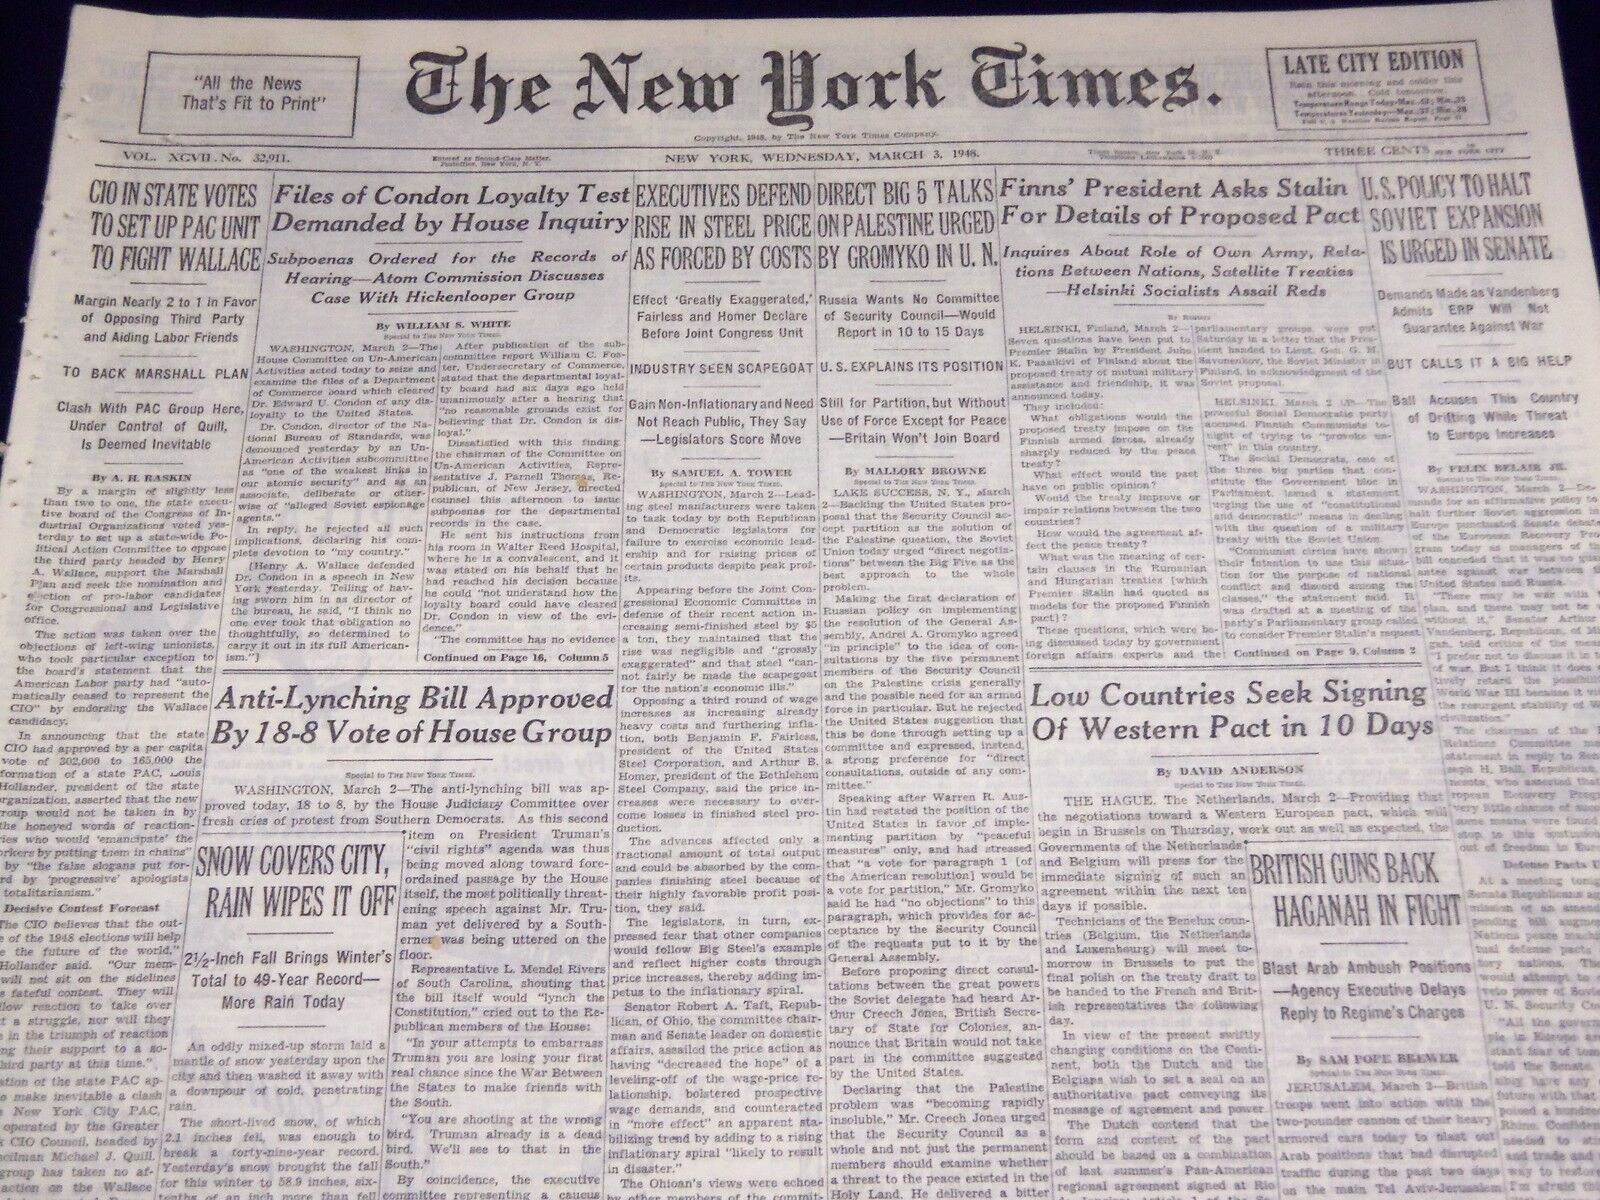 1948 MARCH 3 NEW YORK TIMES RAG EDITION - TALKS ON PALESTINE URGED - NT 2905